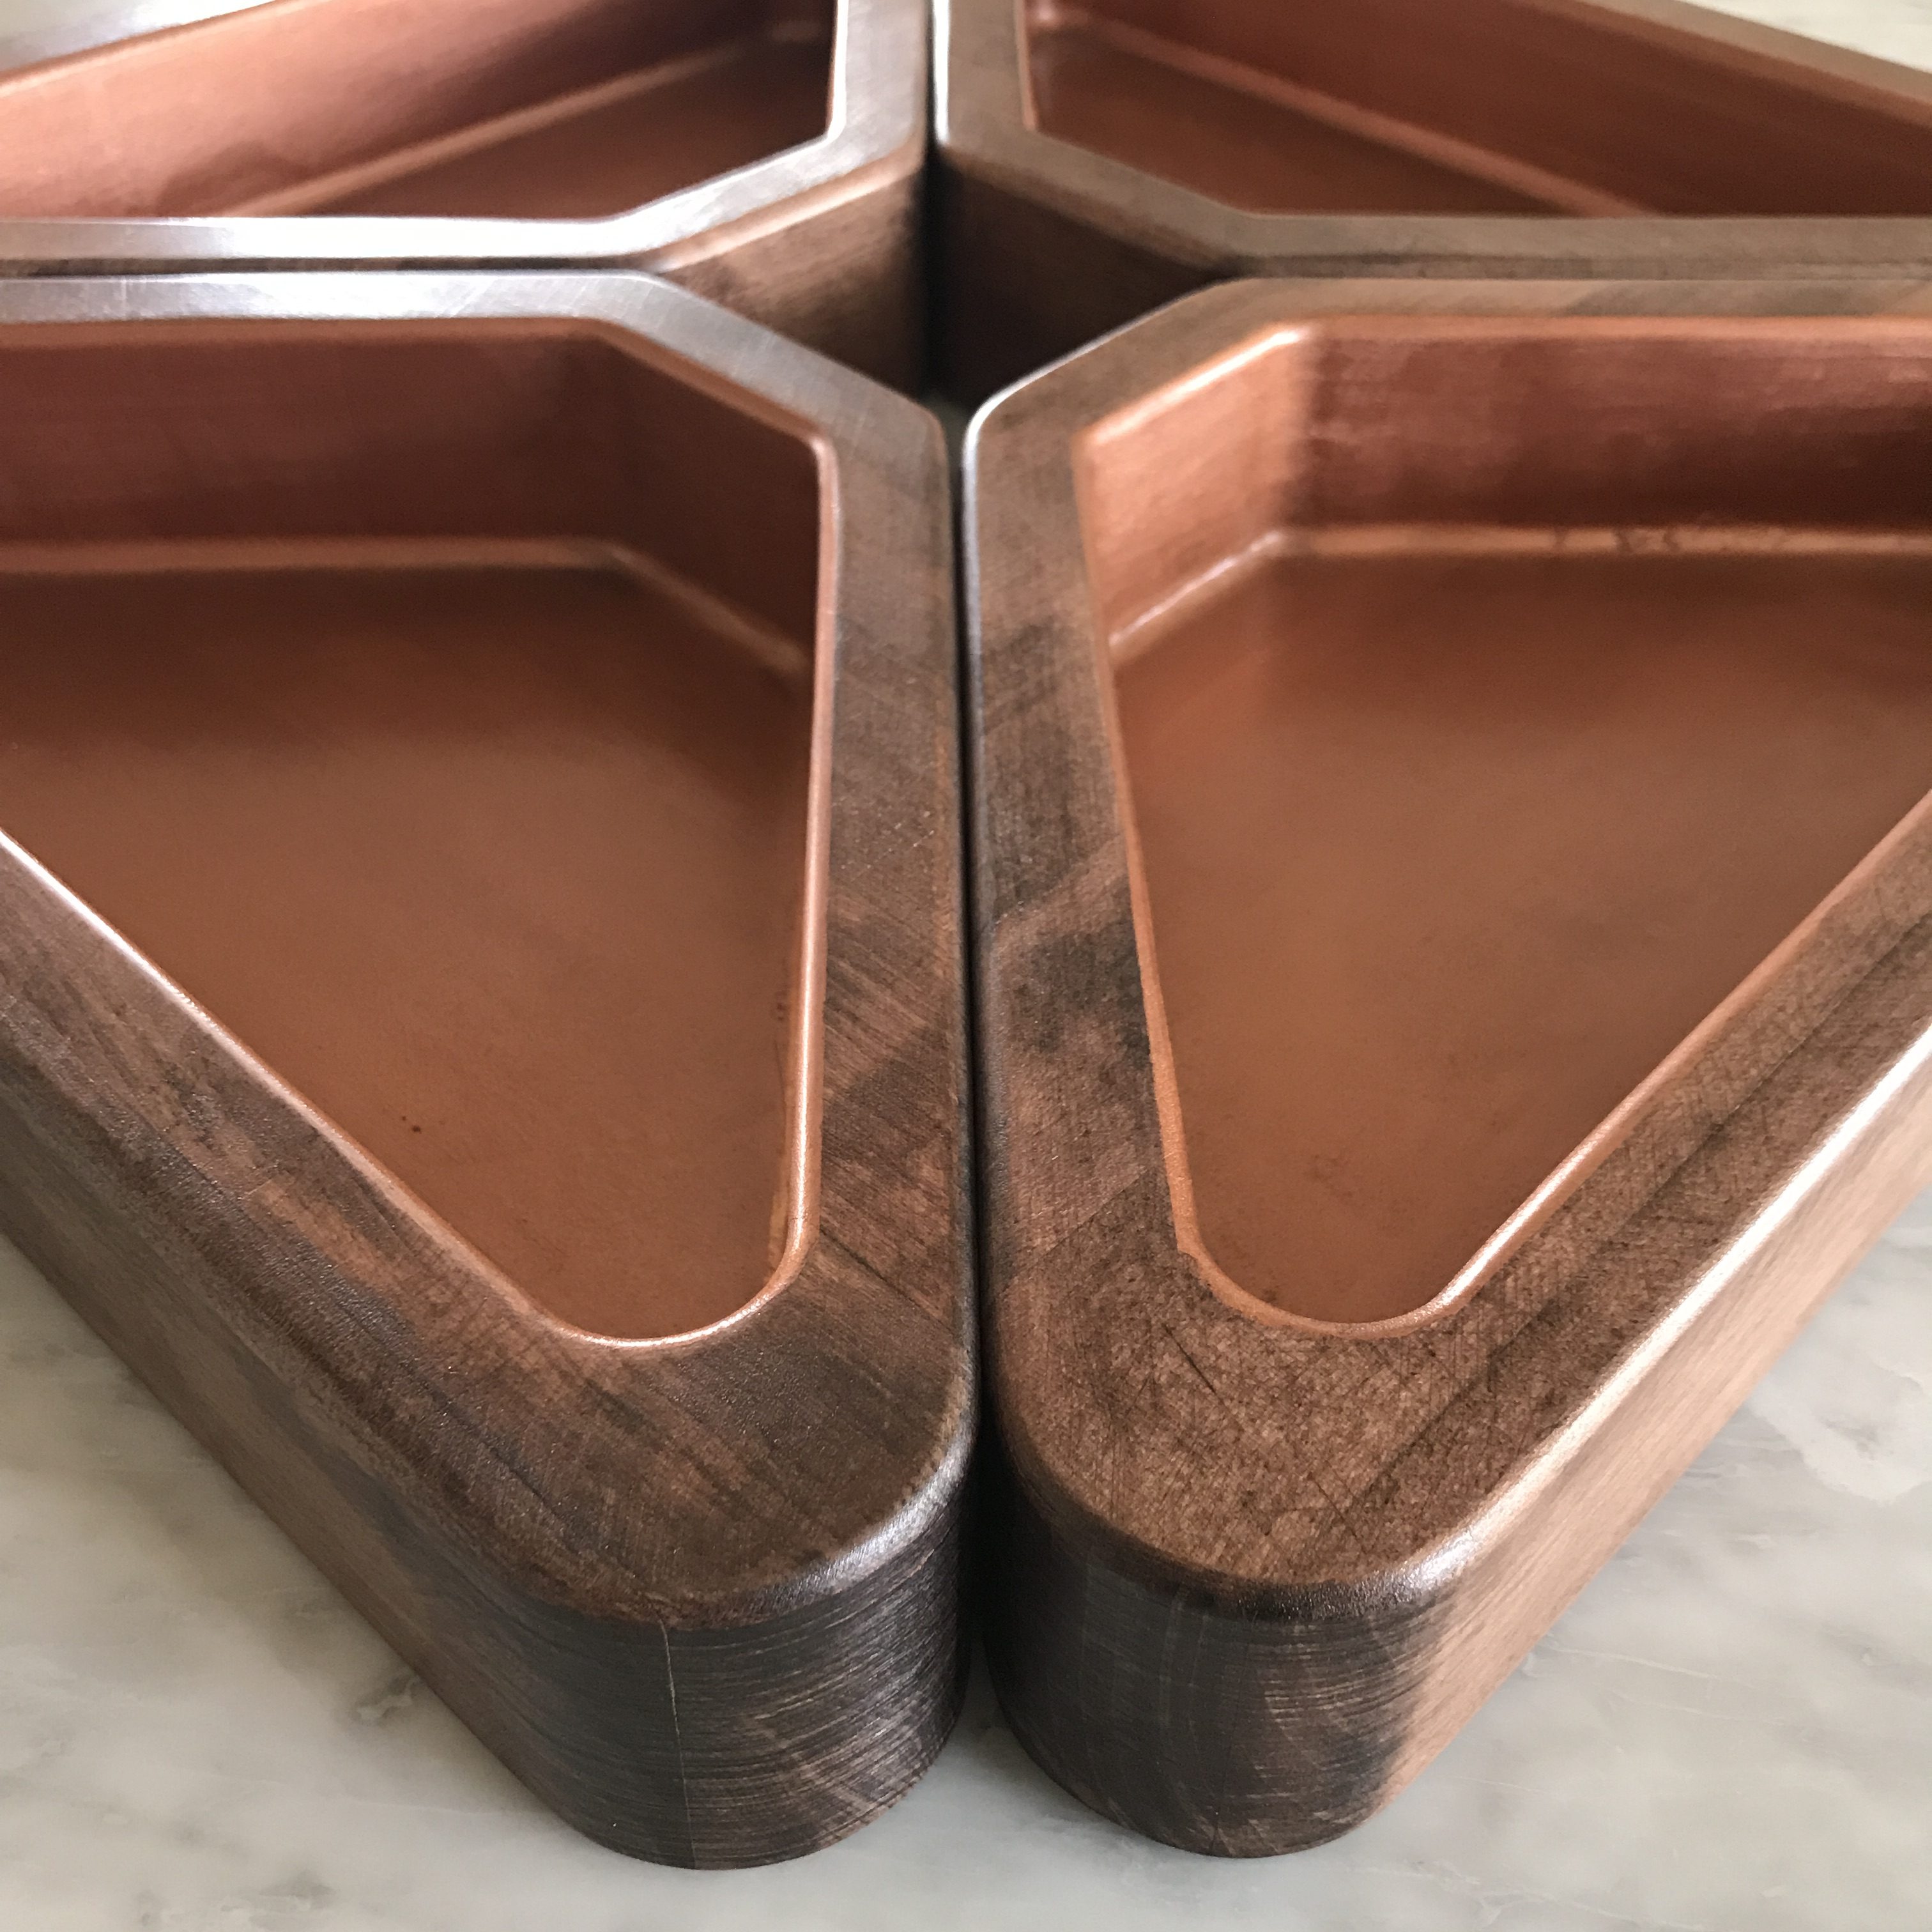 Copper Lined Bowl Set